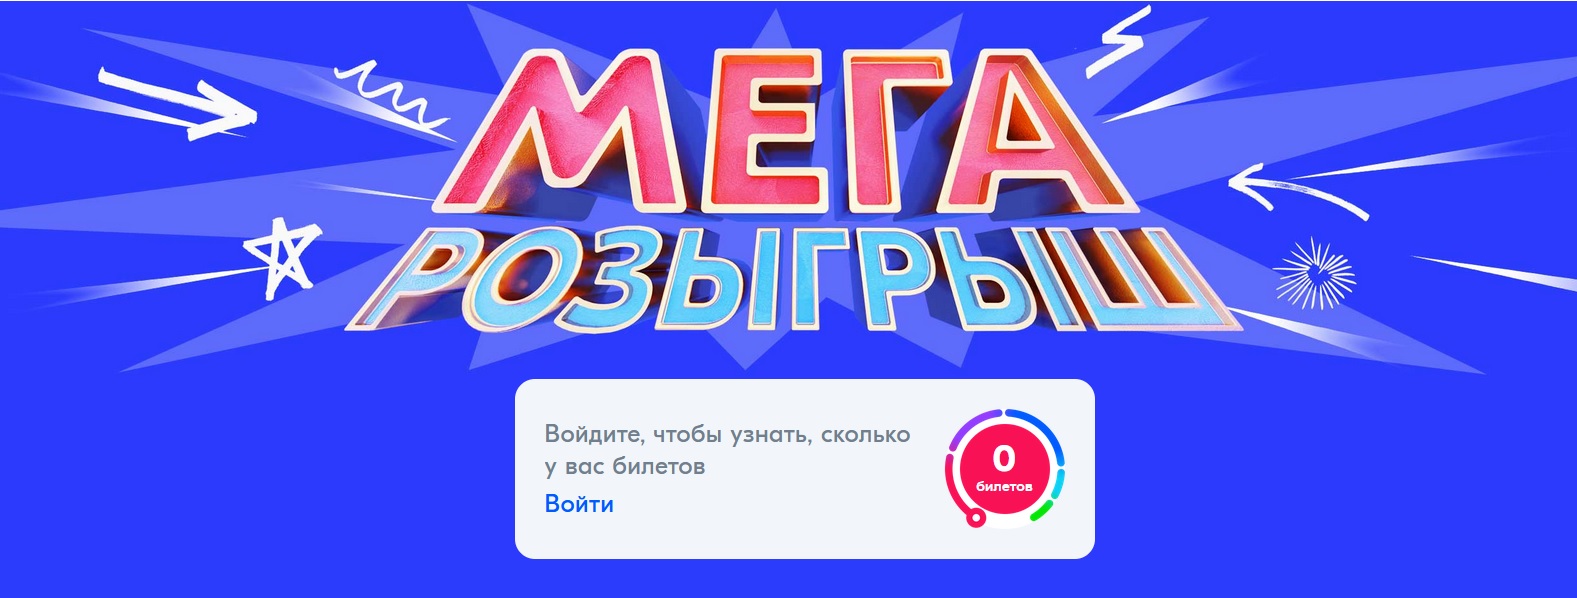 Промо-акция Ozon.ru: «Мегарозыгрыш квартиры и тысячи призов»